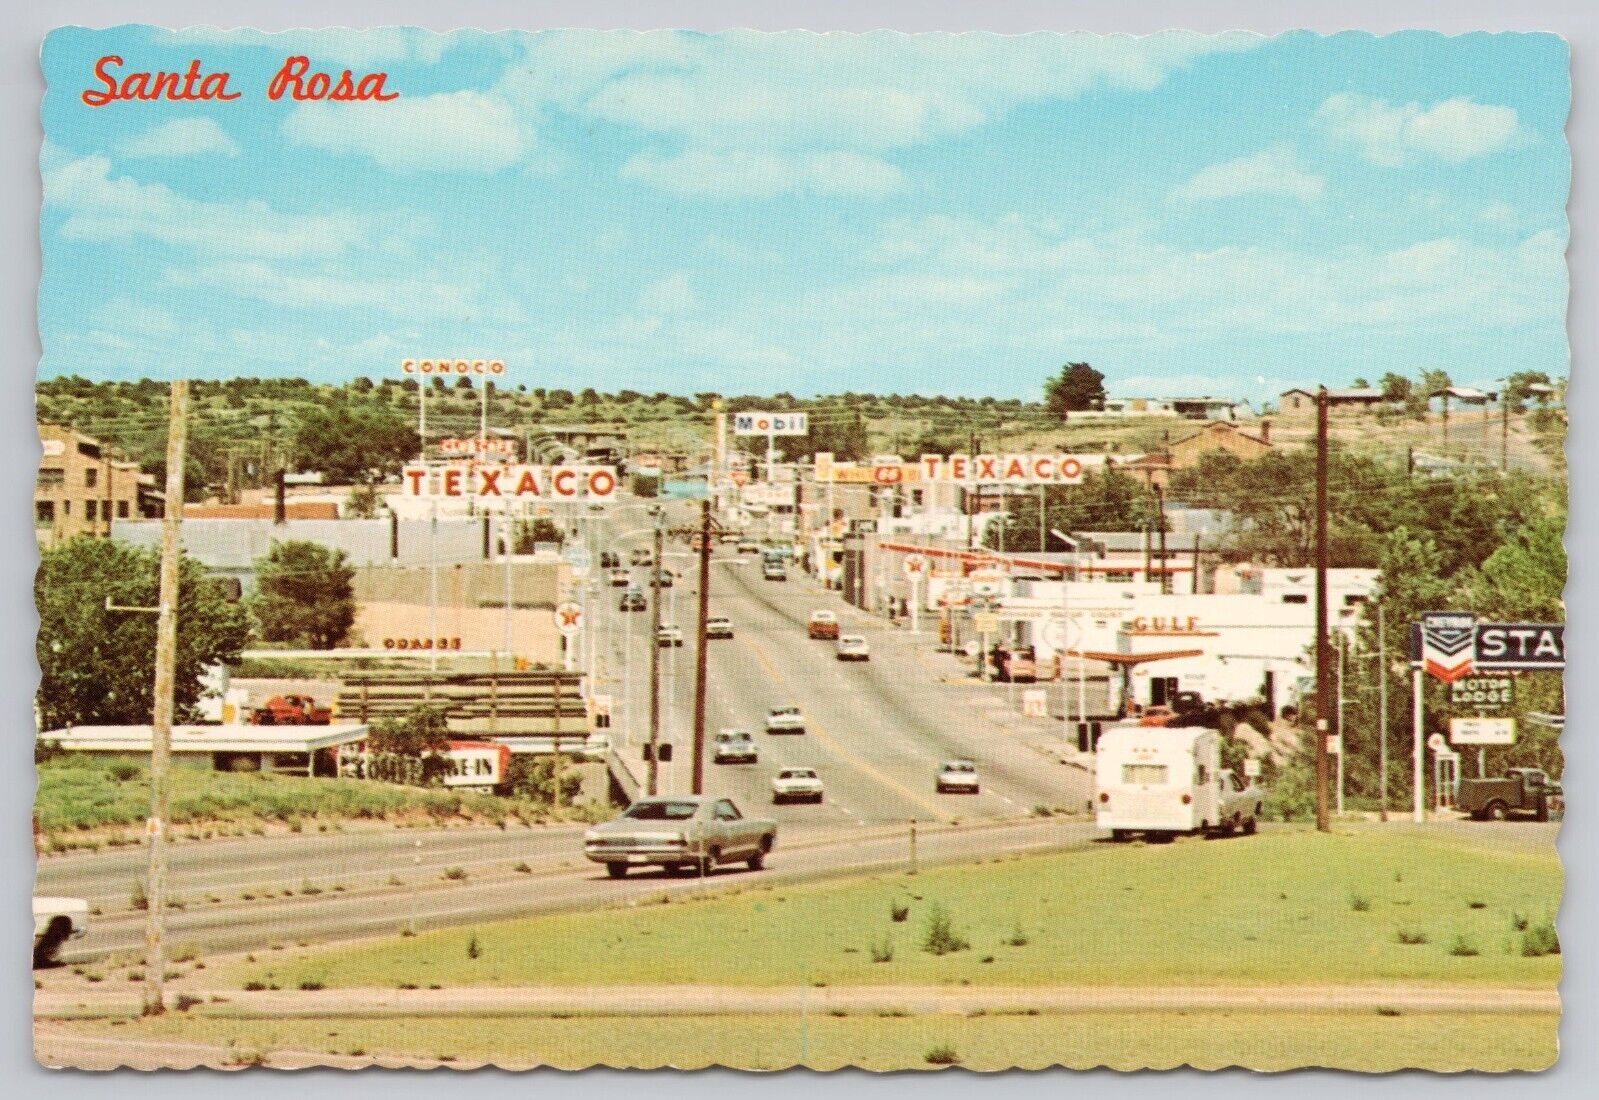 Santa Rosa New Mexico, US Route 66, Gas Stations, Texaco Mobil, Vintage Postcard